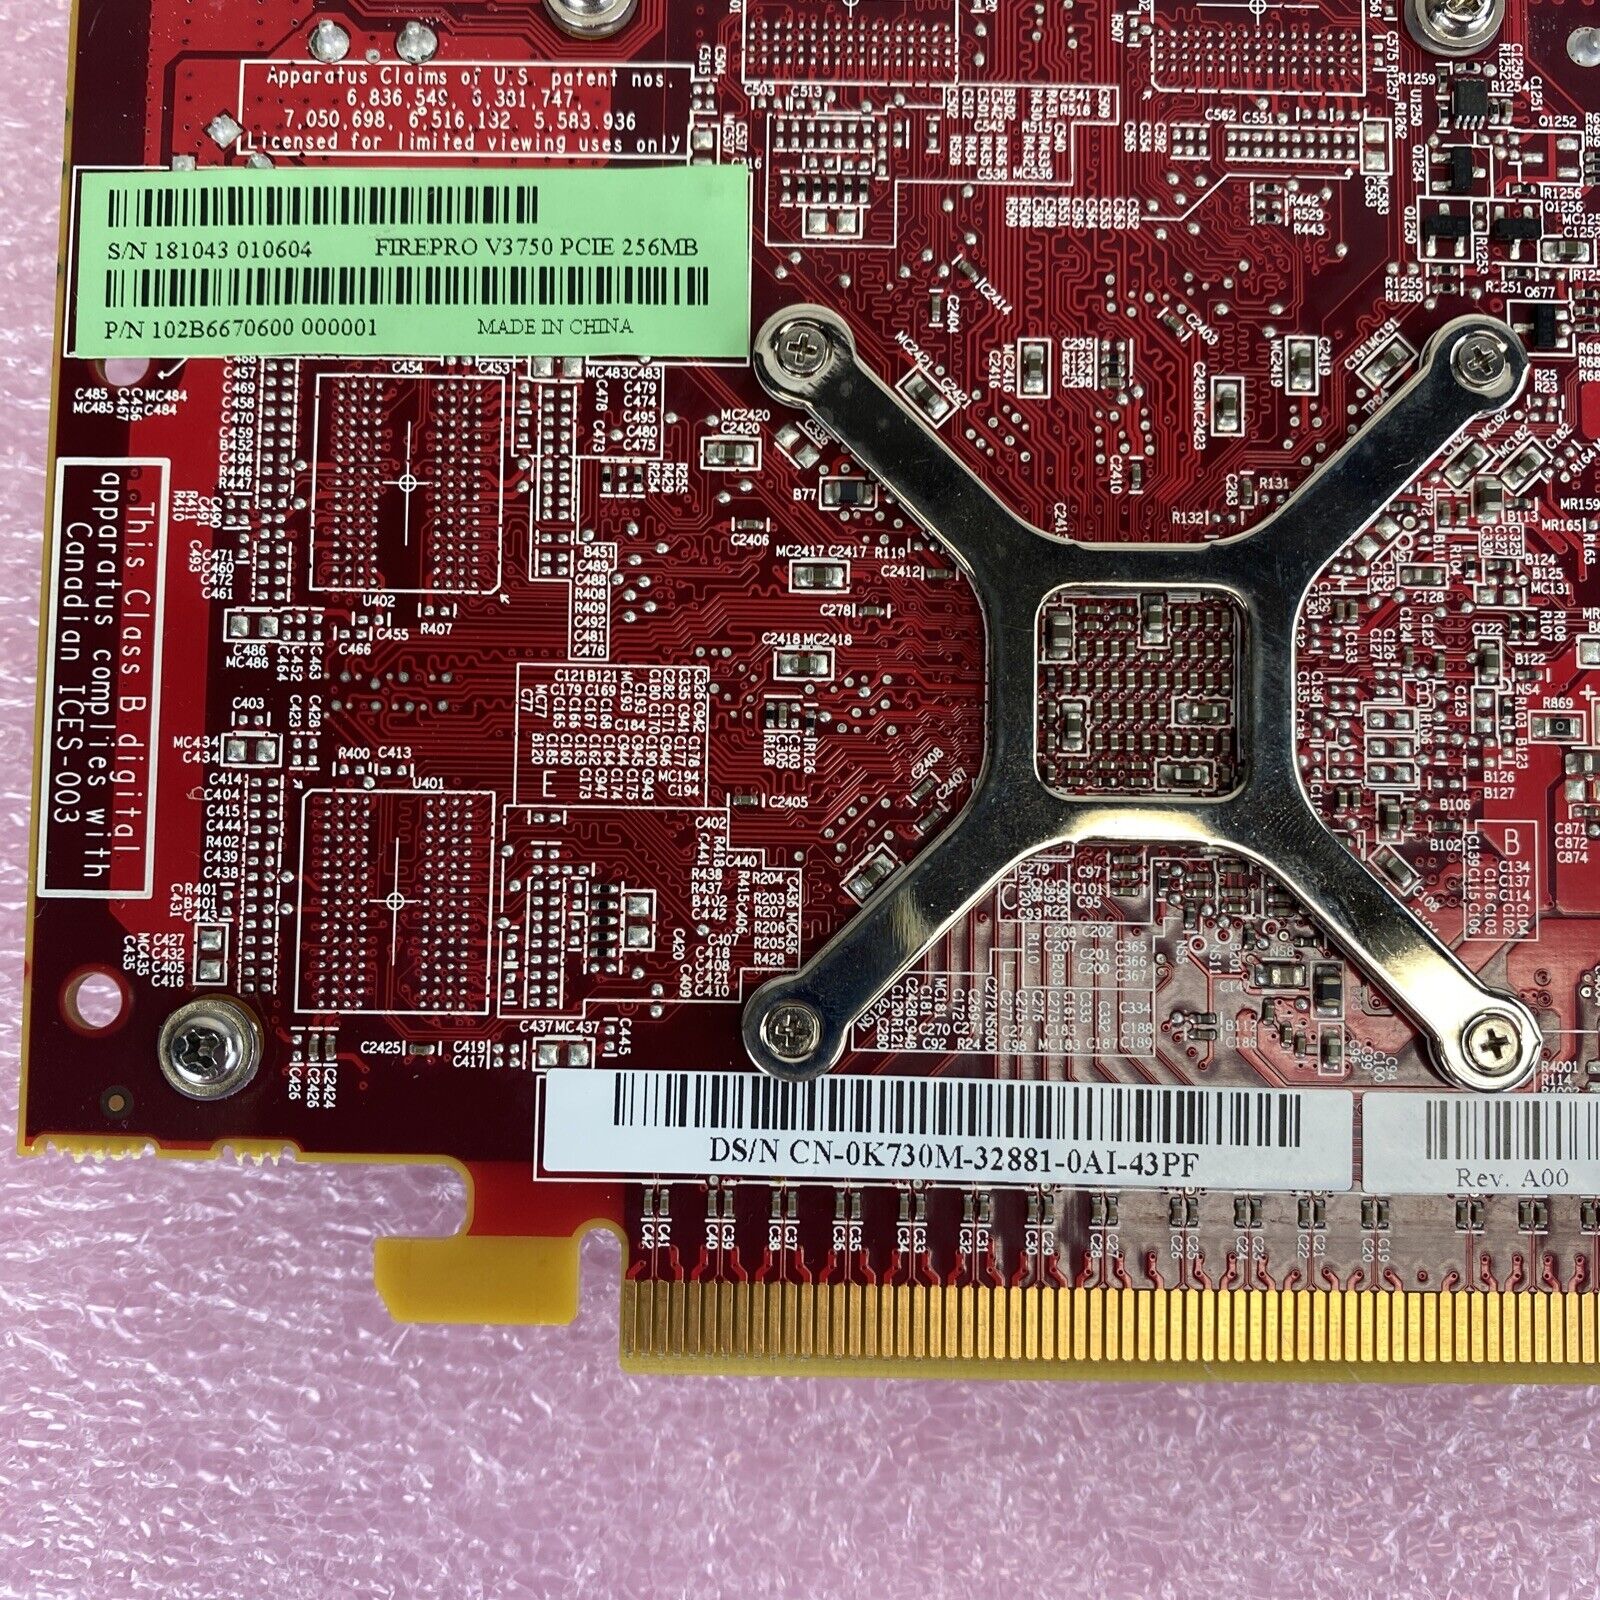 AMD ATI FirePro V3750 256MB DVI video graphics card with (2) DisplayPorts